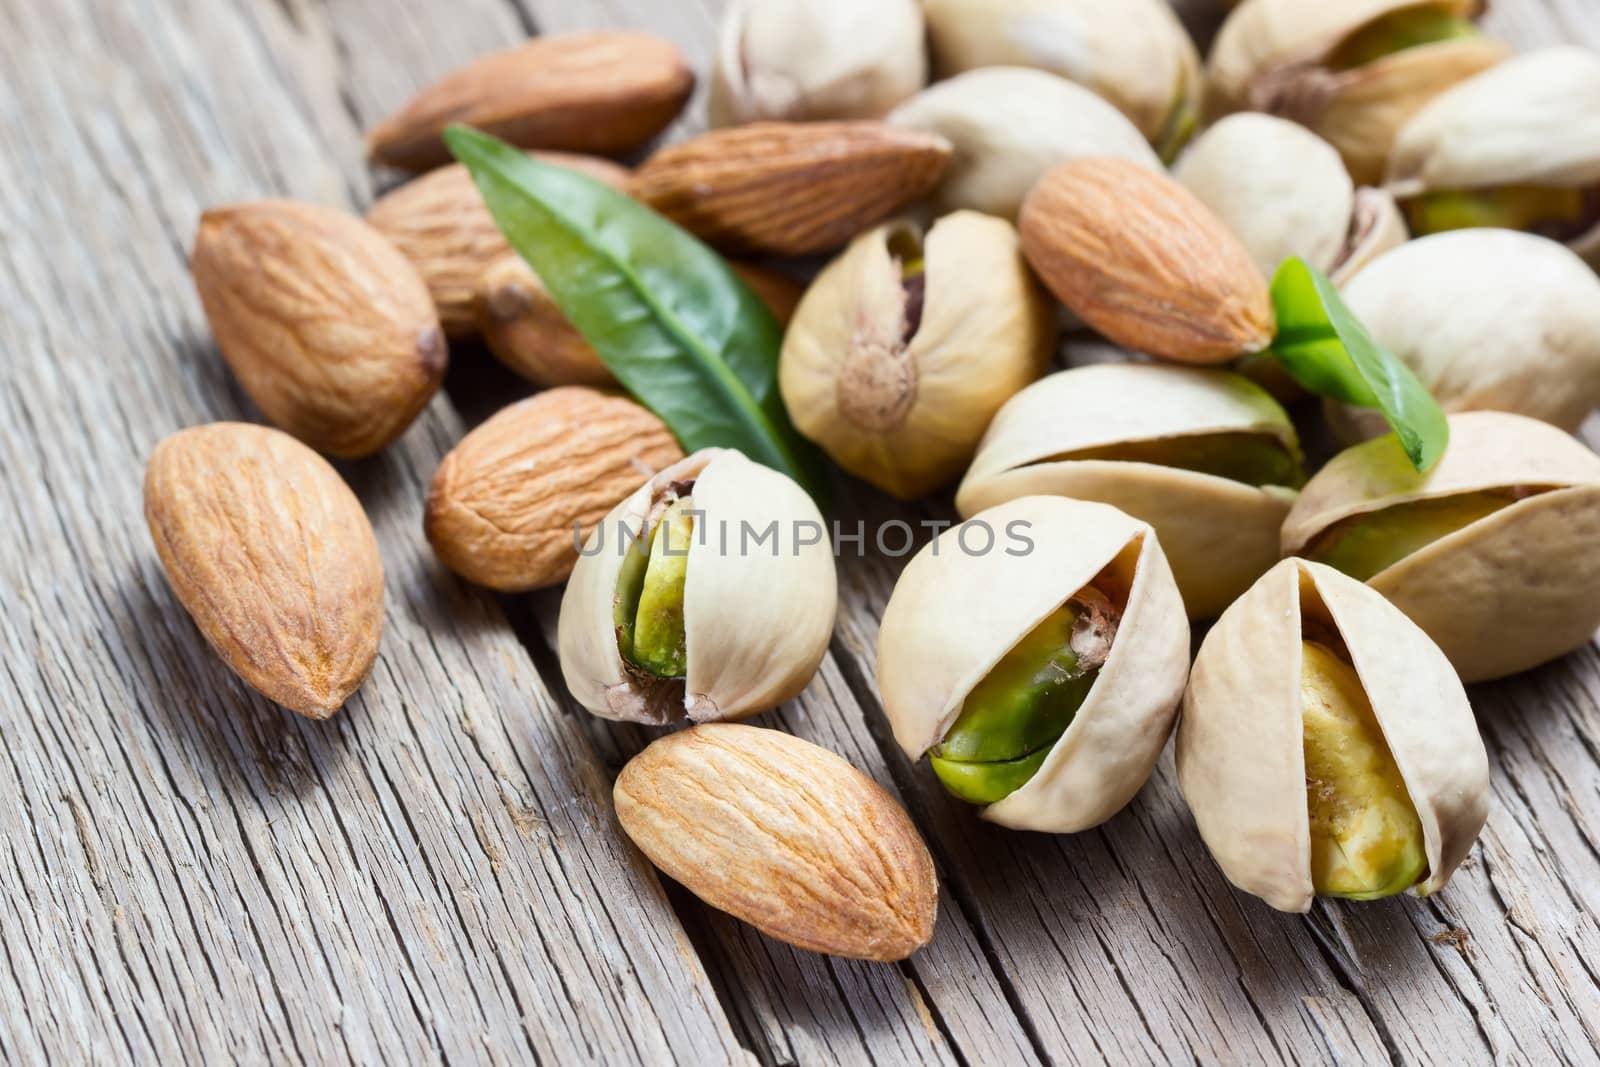 Almond and pistachio by Valengilda